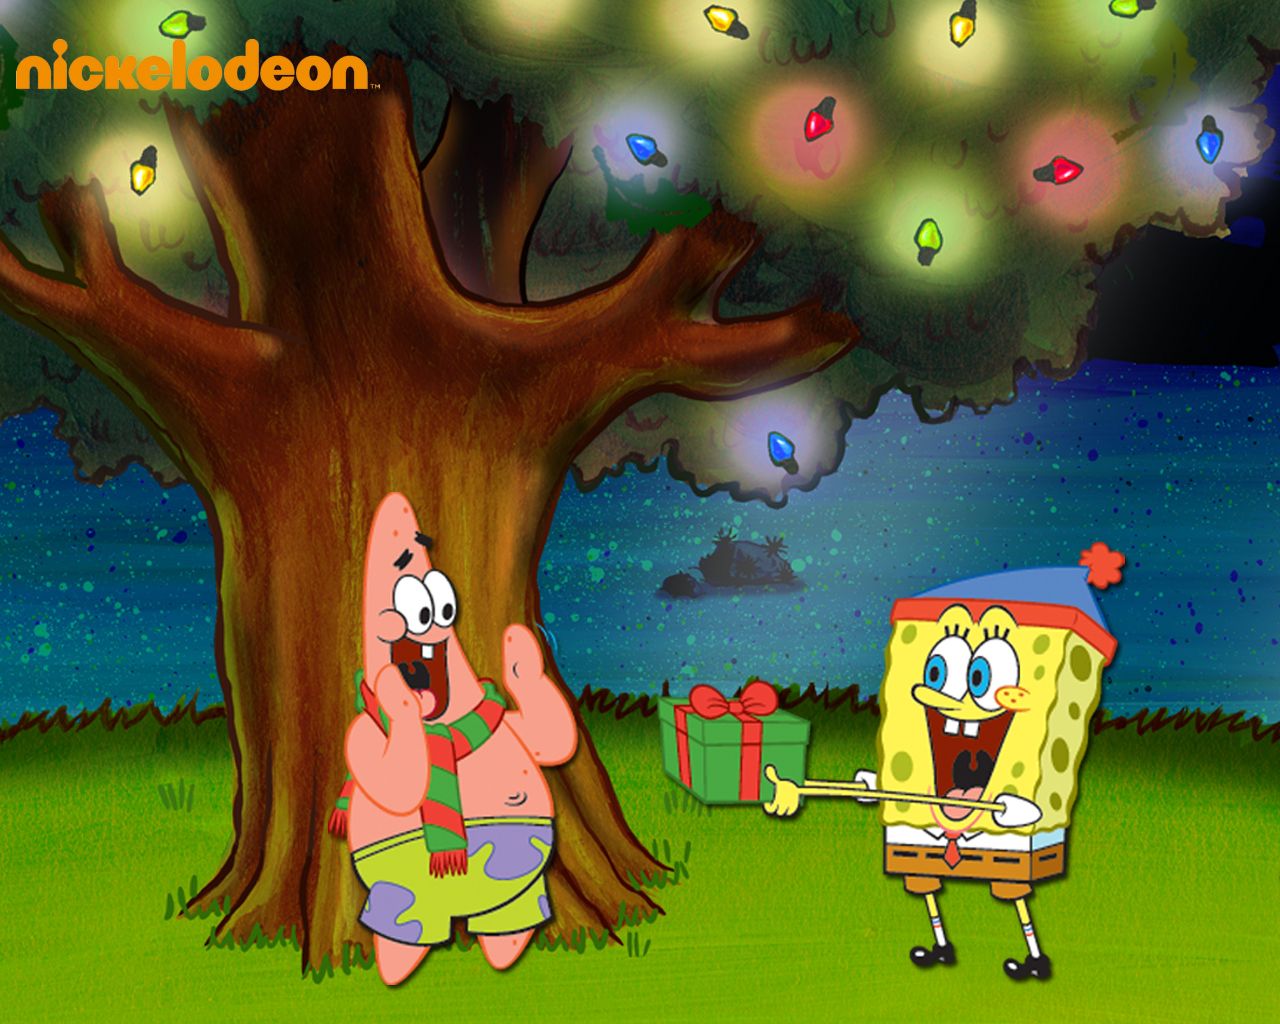 Spongebob Squarepants Wallpaper: Spongebob & Patrick. Spongebob christmas, Animated christmas, Cute christmas wallpaper